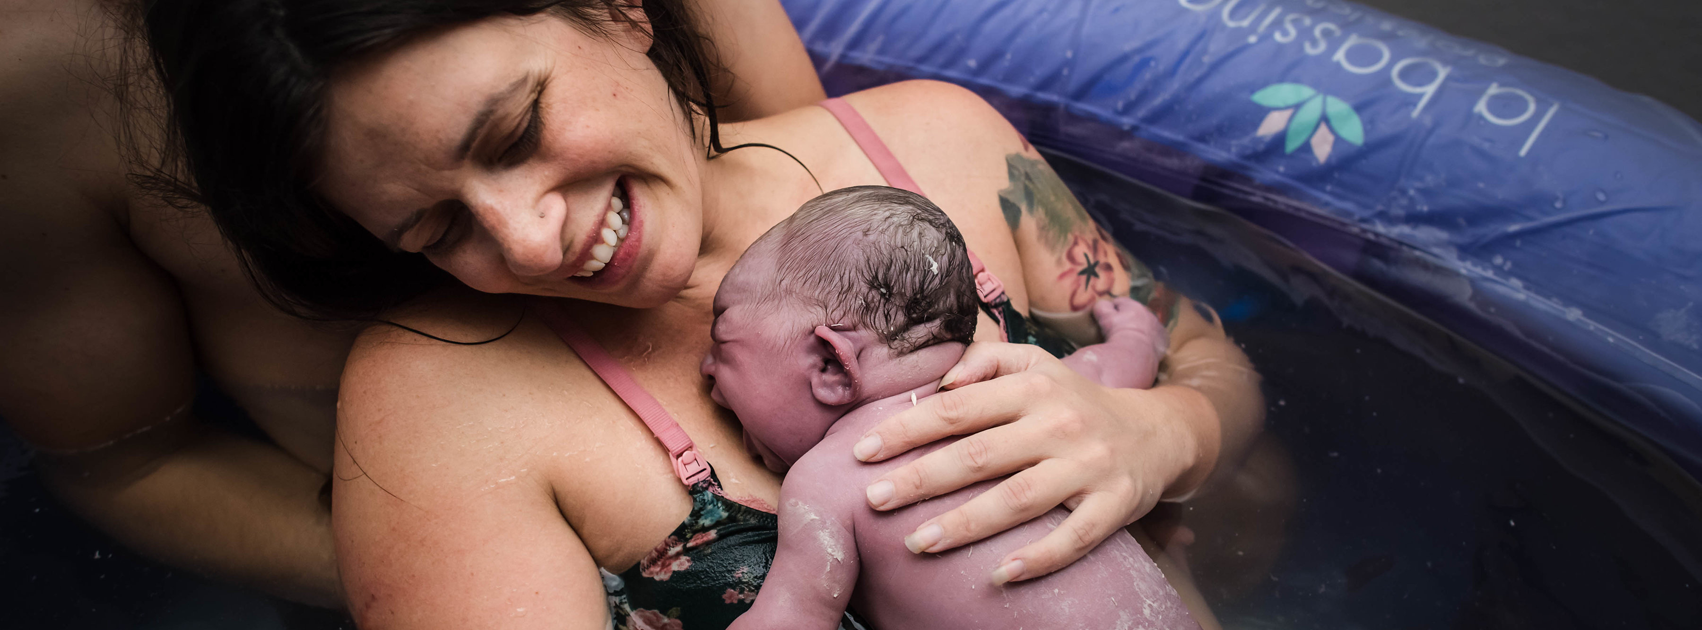 Home Birth - Water Birth - Birth Center Birth - Ventura County Midwife